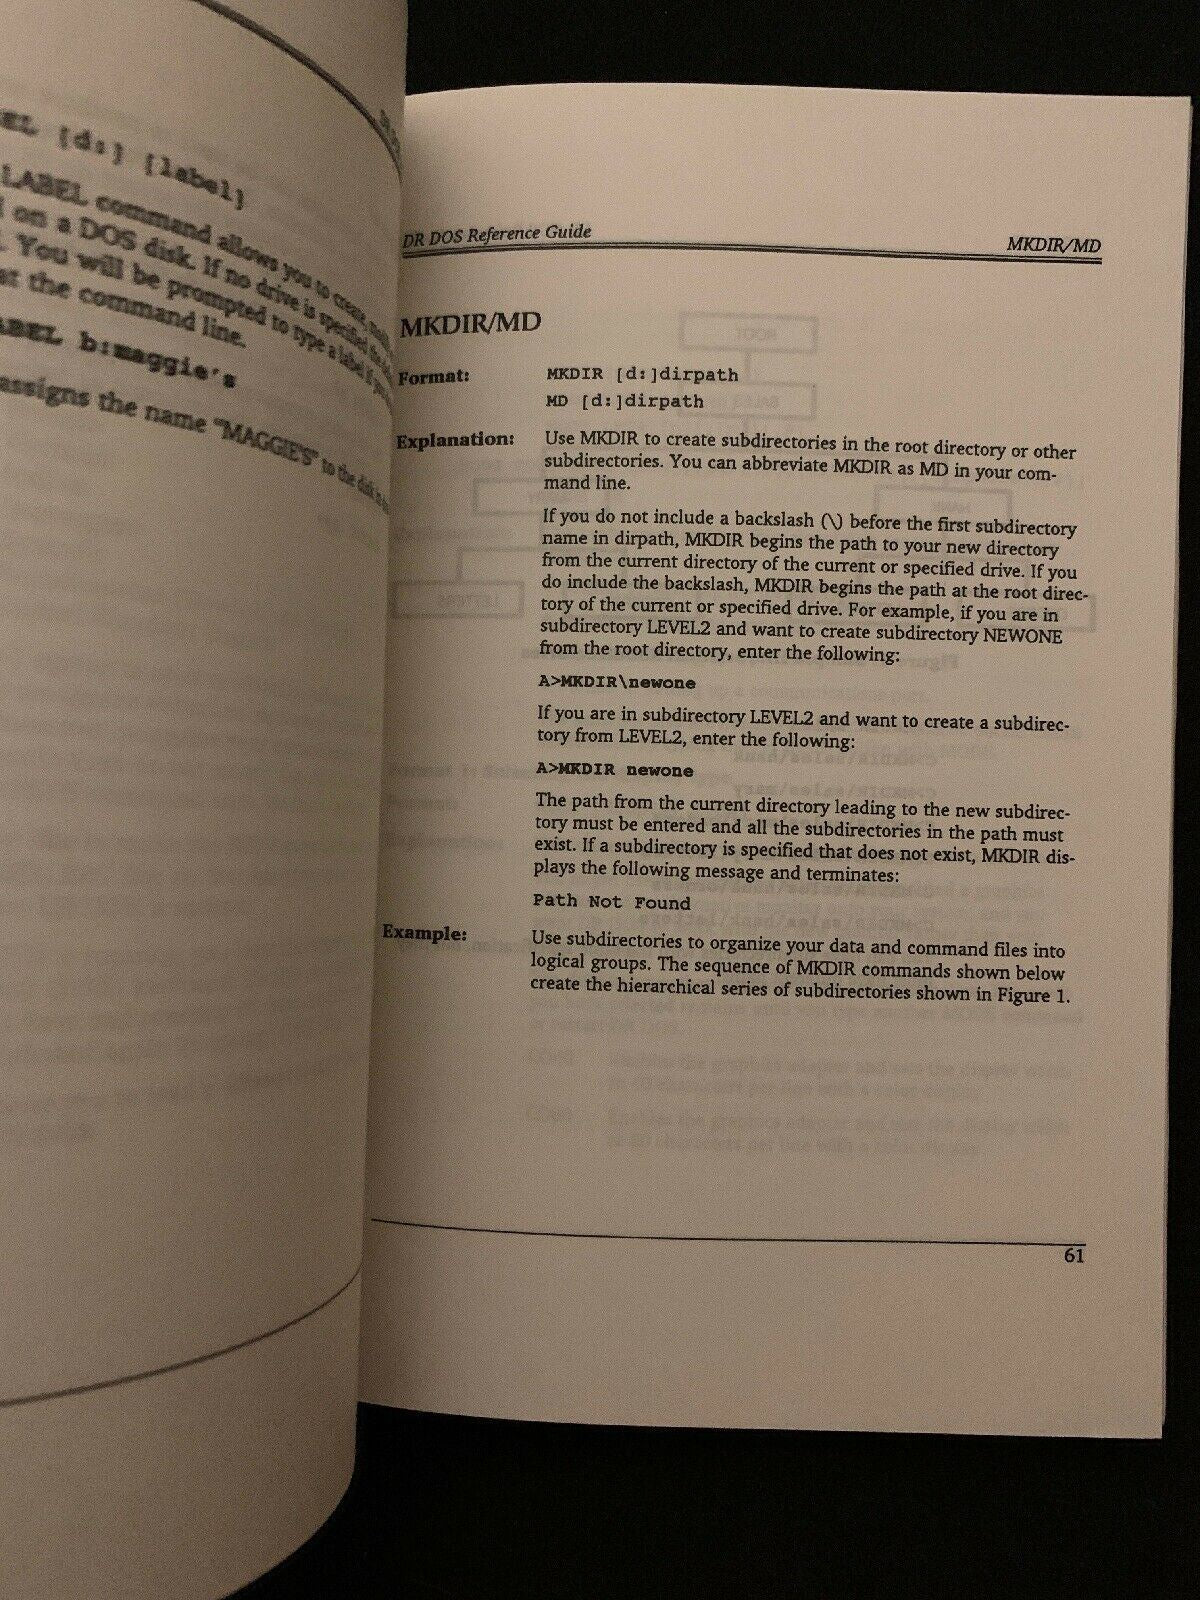 Genuine Original DR DOS Digital Research User & Reference Guide Manual